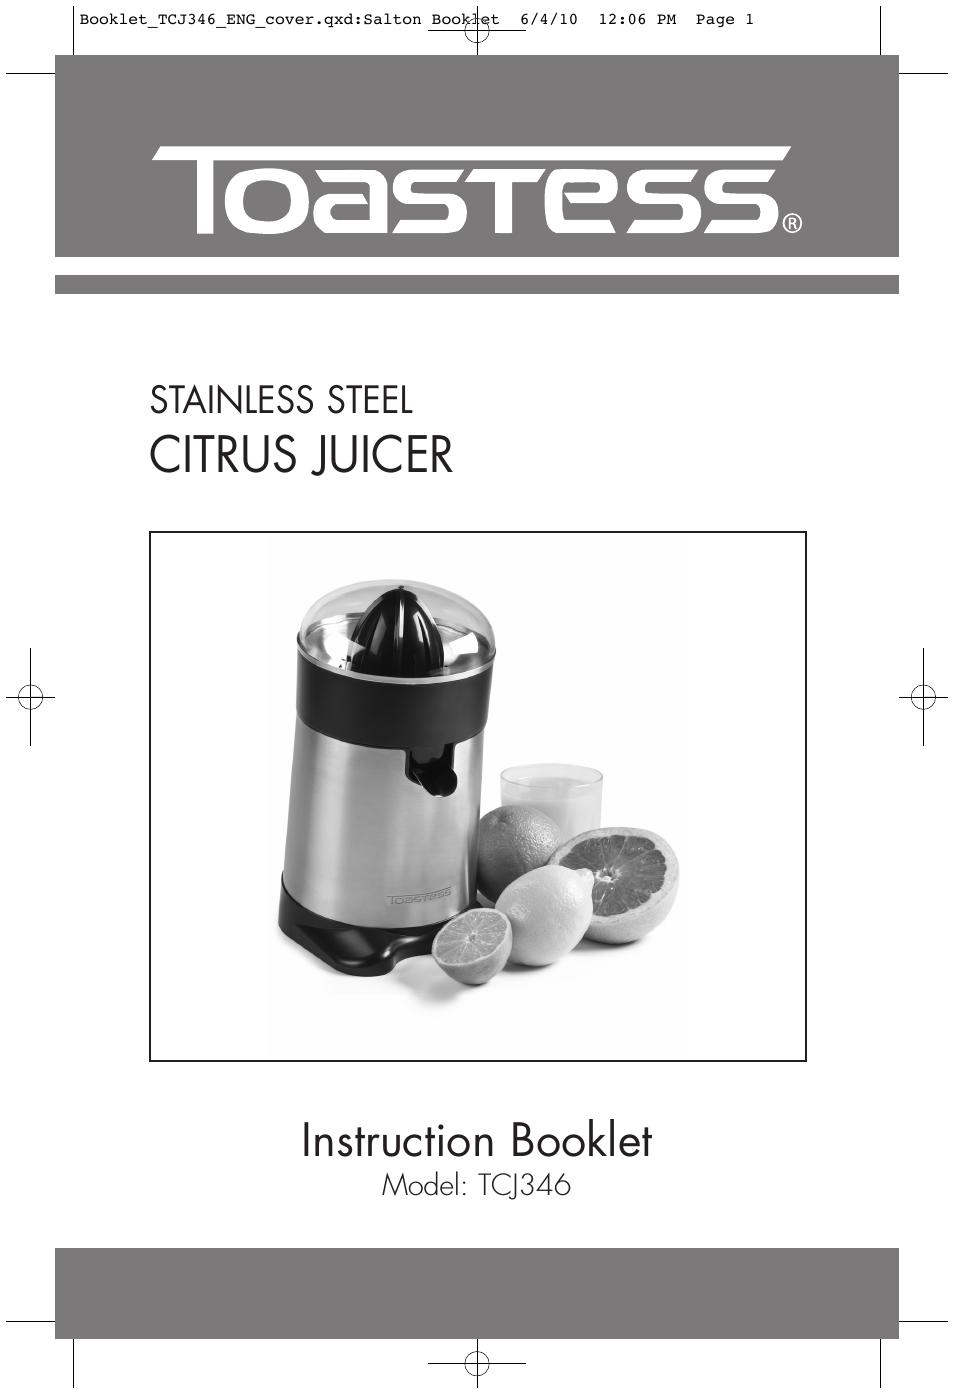 Stainless Steel Citrus Juicer TCJ346